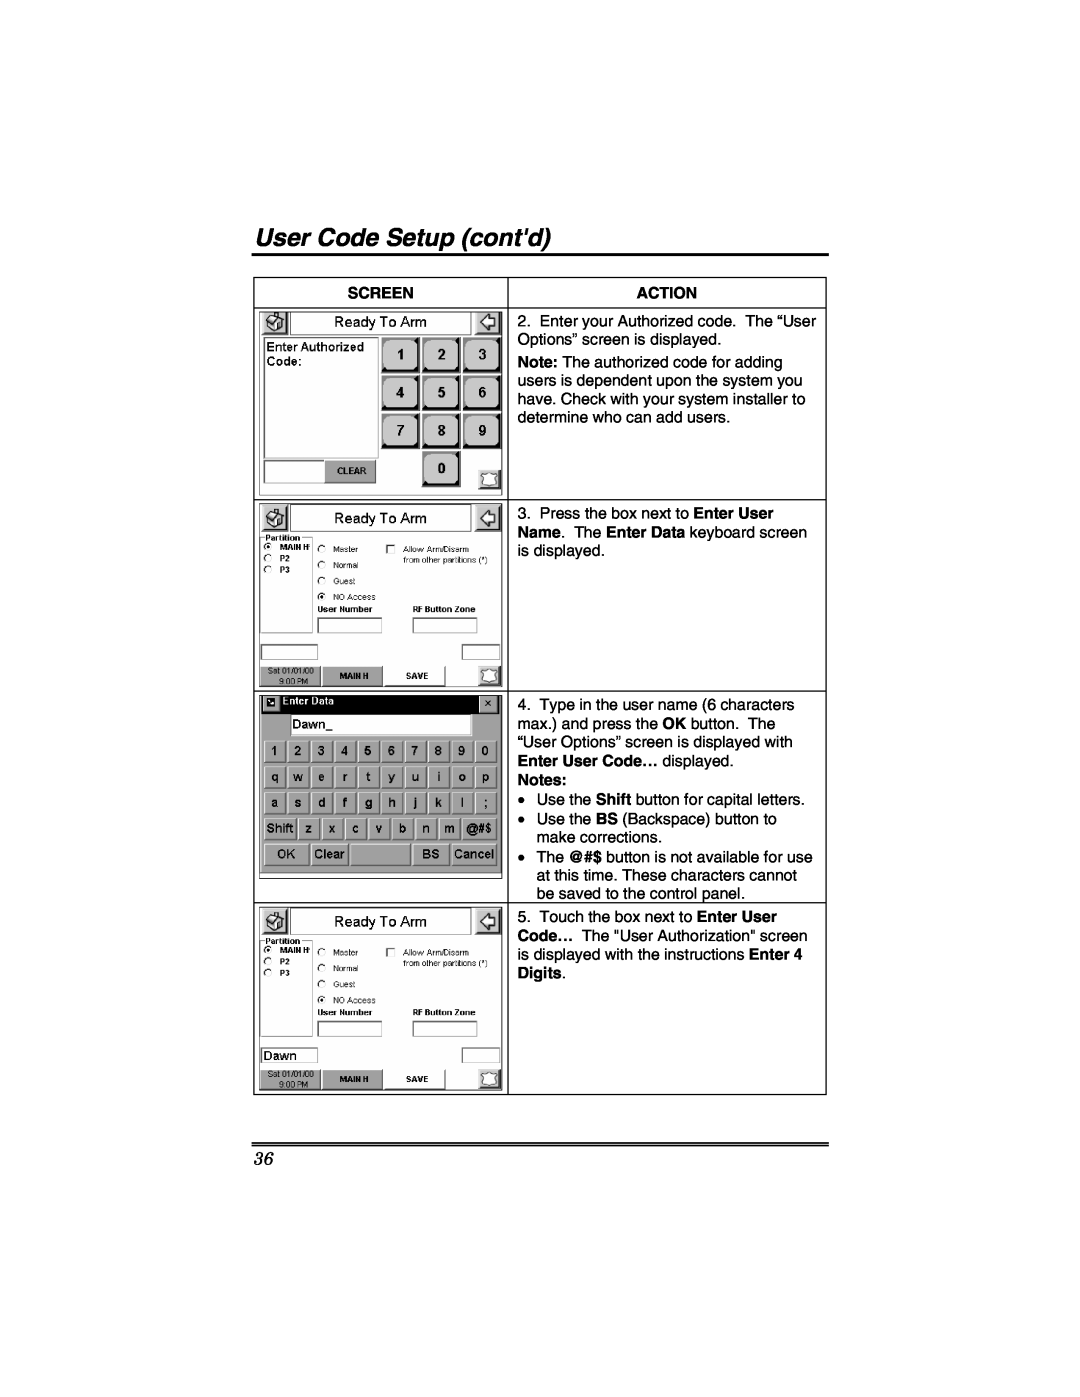 Honeywell 6271V manual User Code Setup contd, Screen, Action, Enter User Code… displayed, Digits 